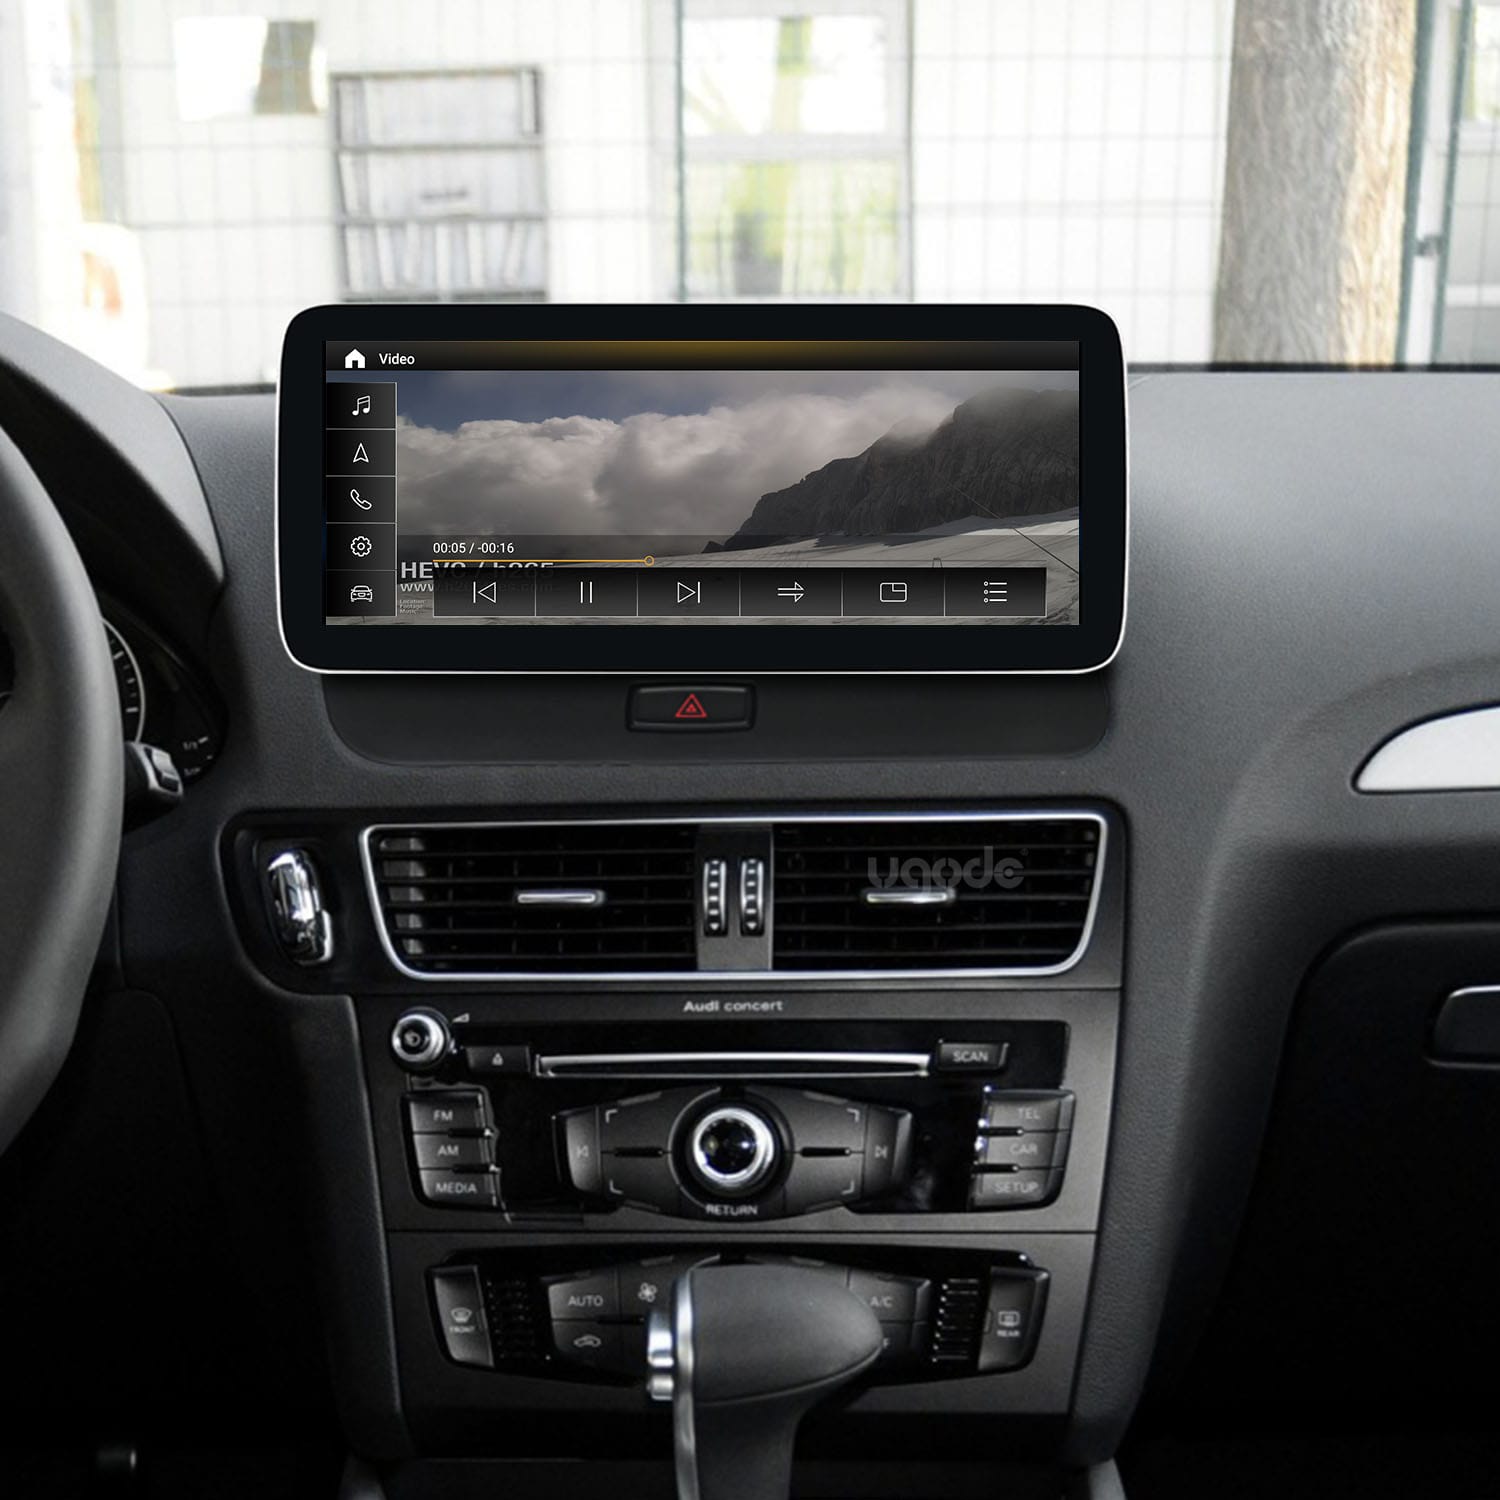 1920*720 Wireless Carplay AutoRadio Android 12 For Audi Q5 2009-2016 Screen  Multimedia Stereo Audio GPS Navigation 4G Head Unit